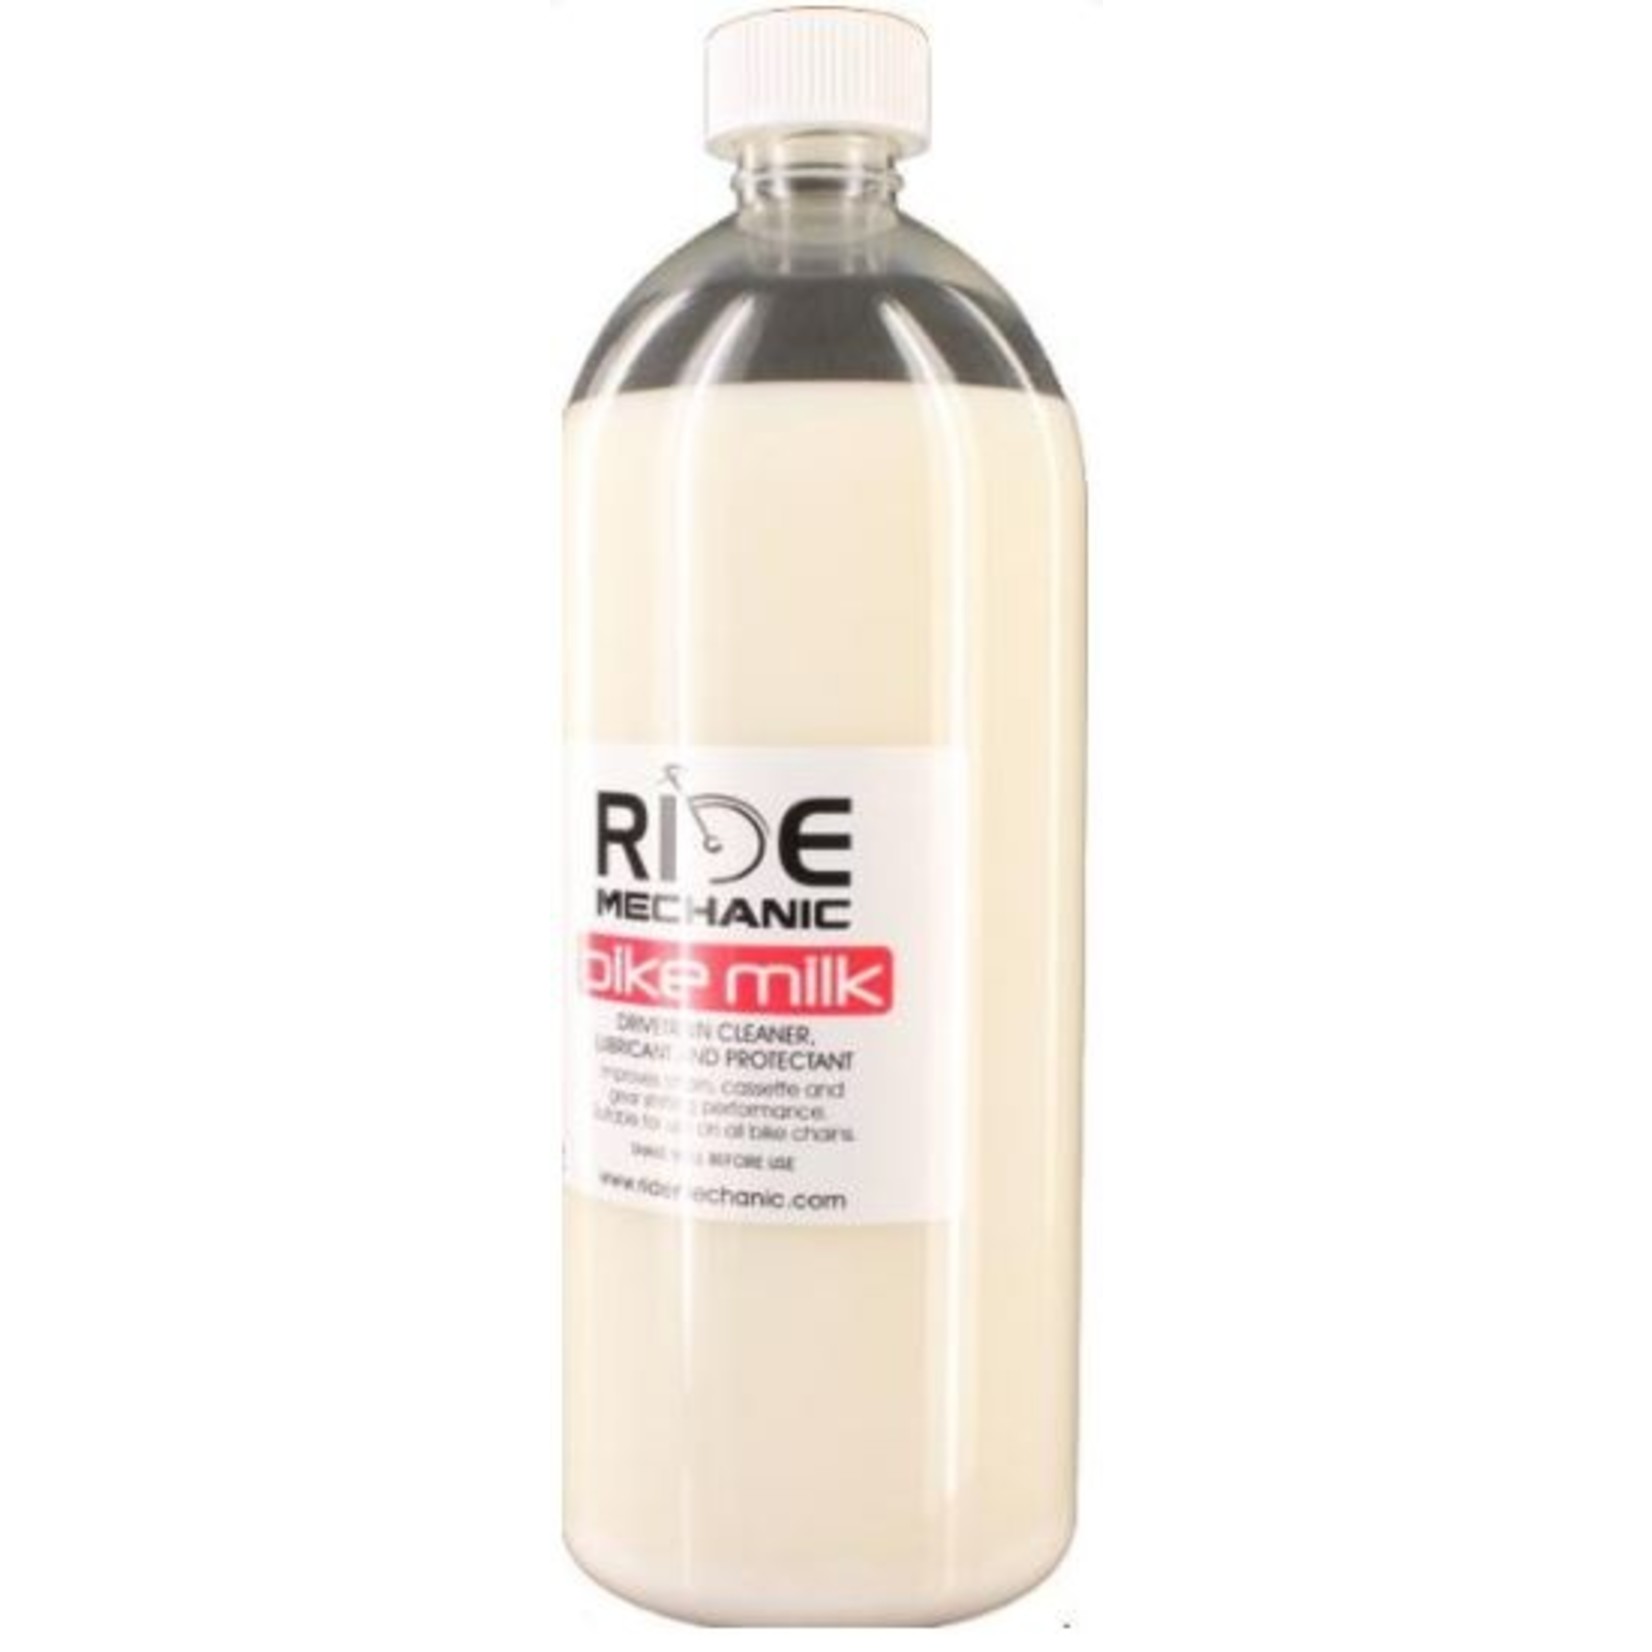 ride mechanic Ride Mechanic Bike Milk - Dry Lubricant - 900Ml -Workshop Bottle